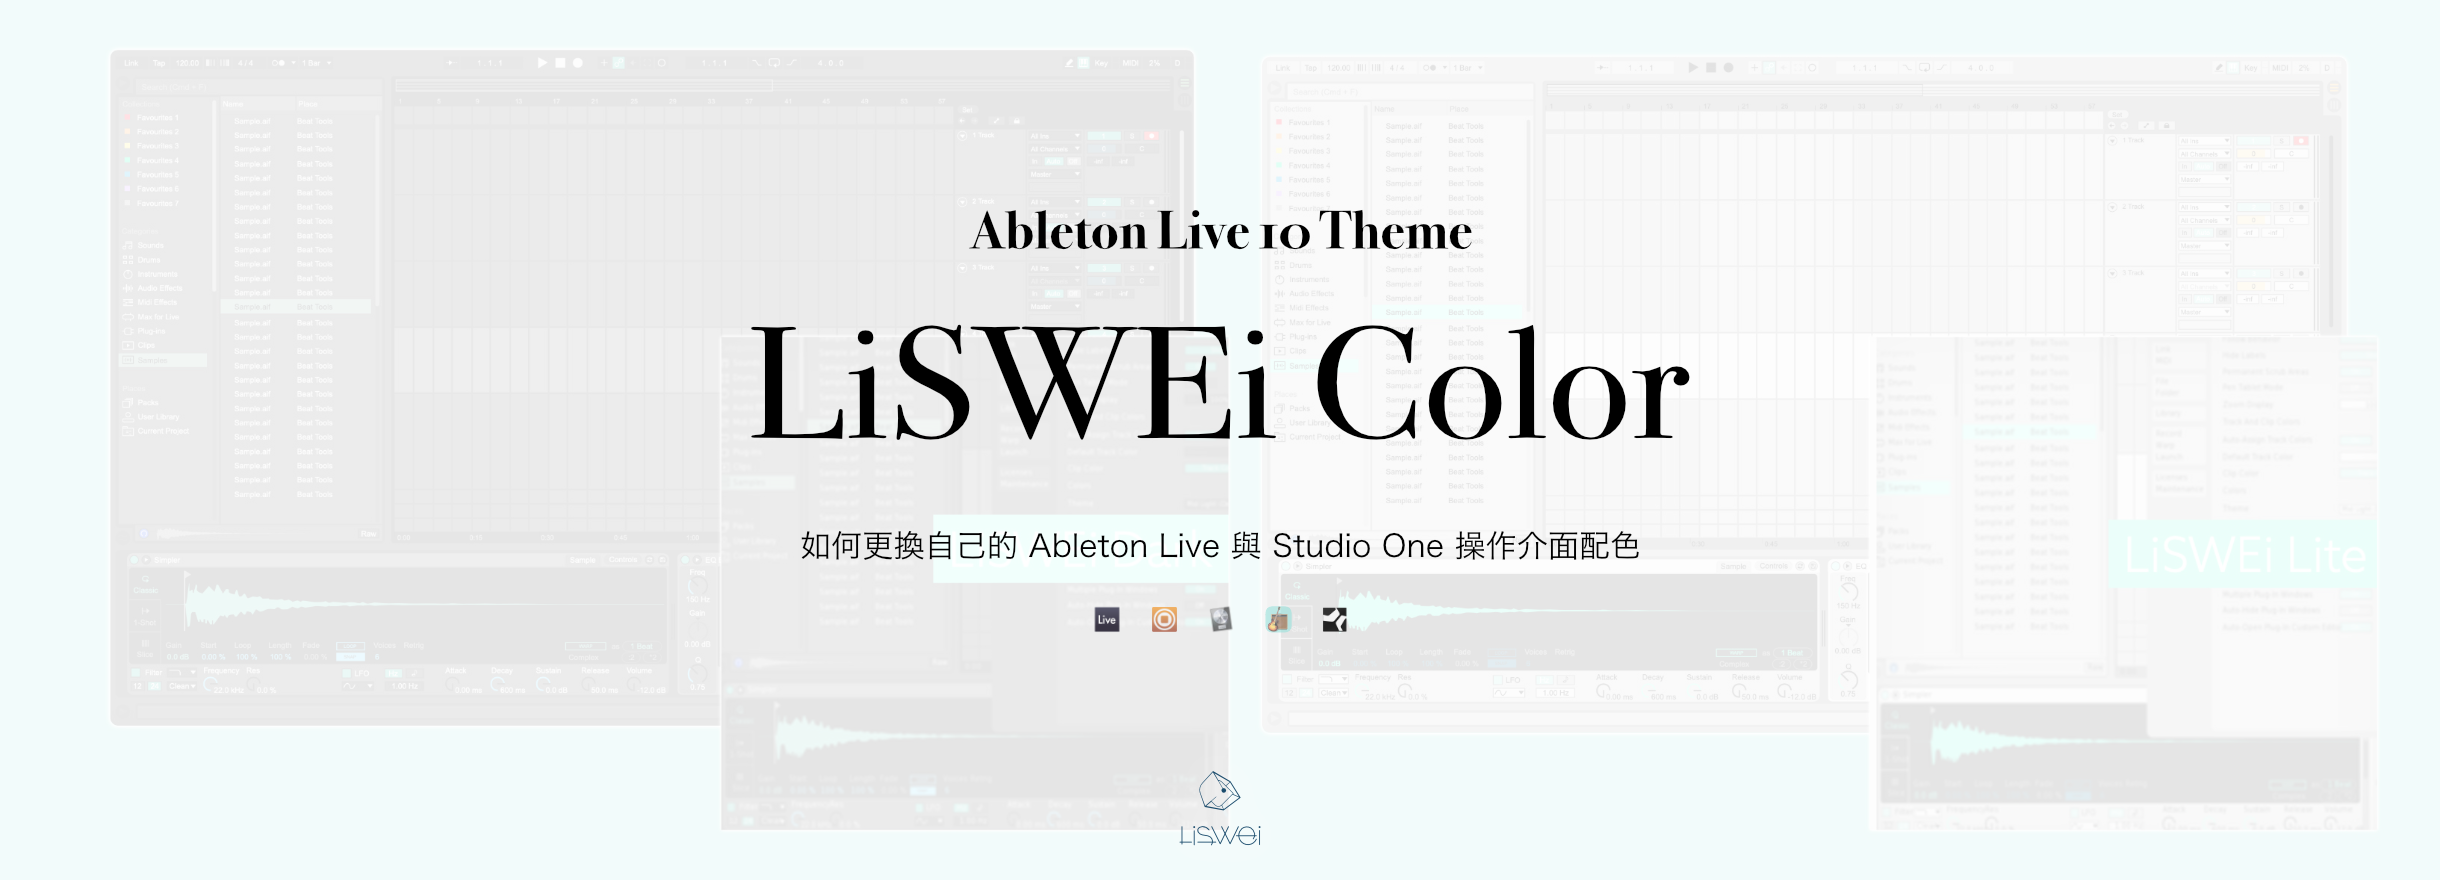 Ableton Live 10 liswei theme